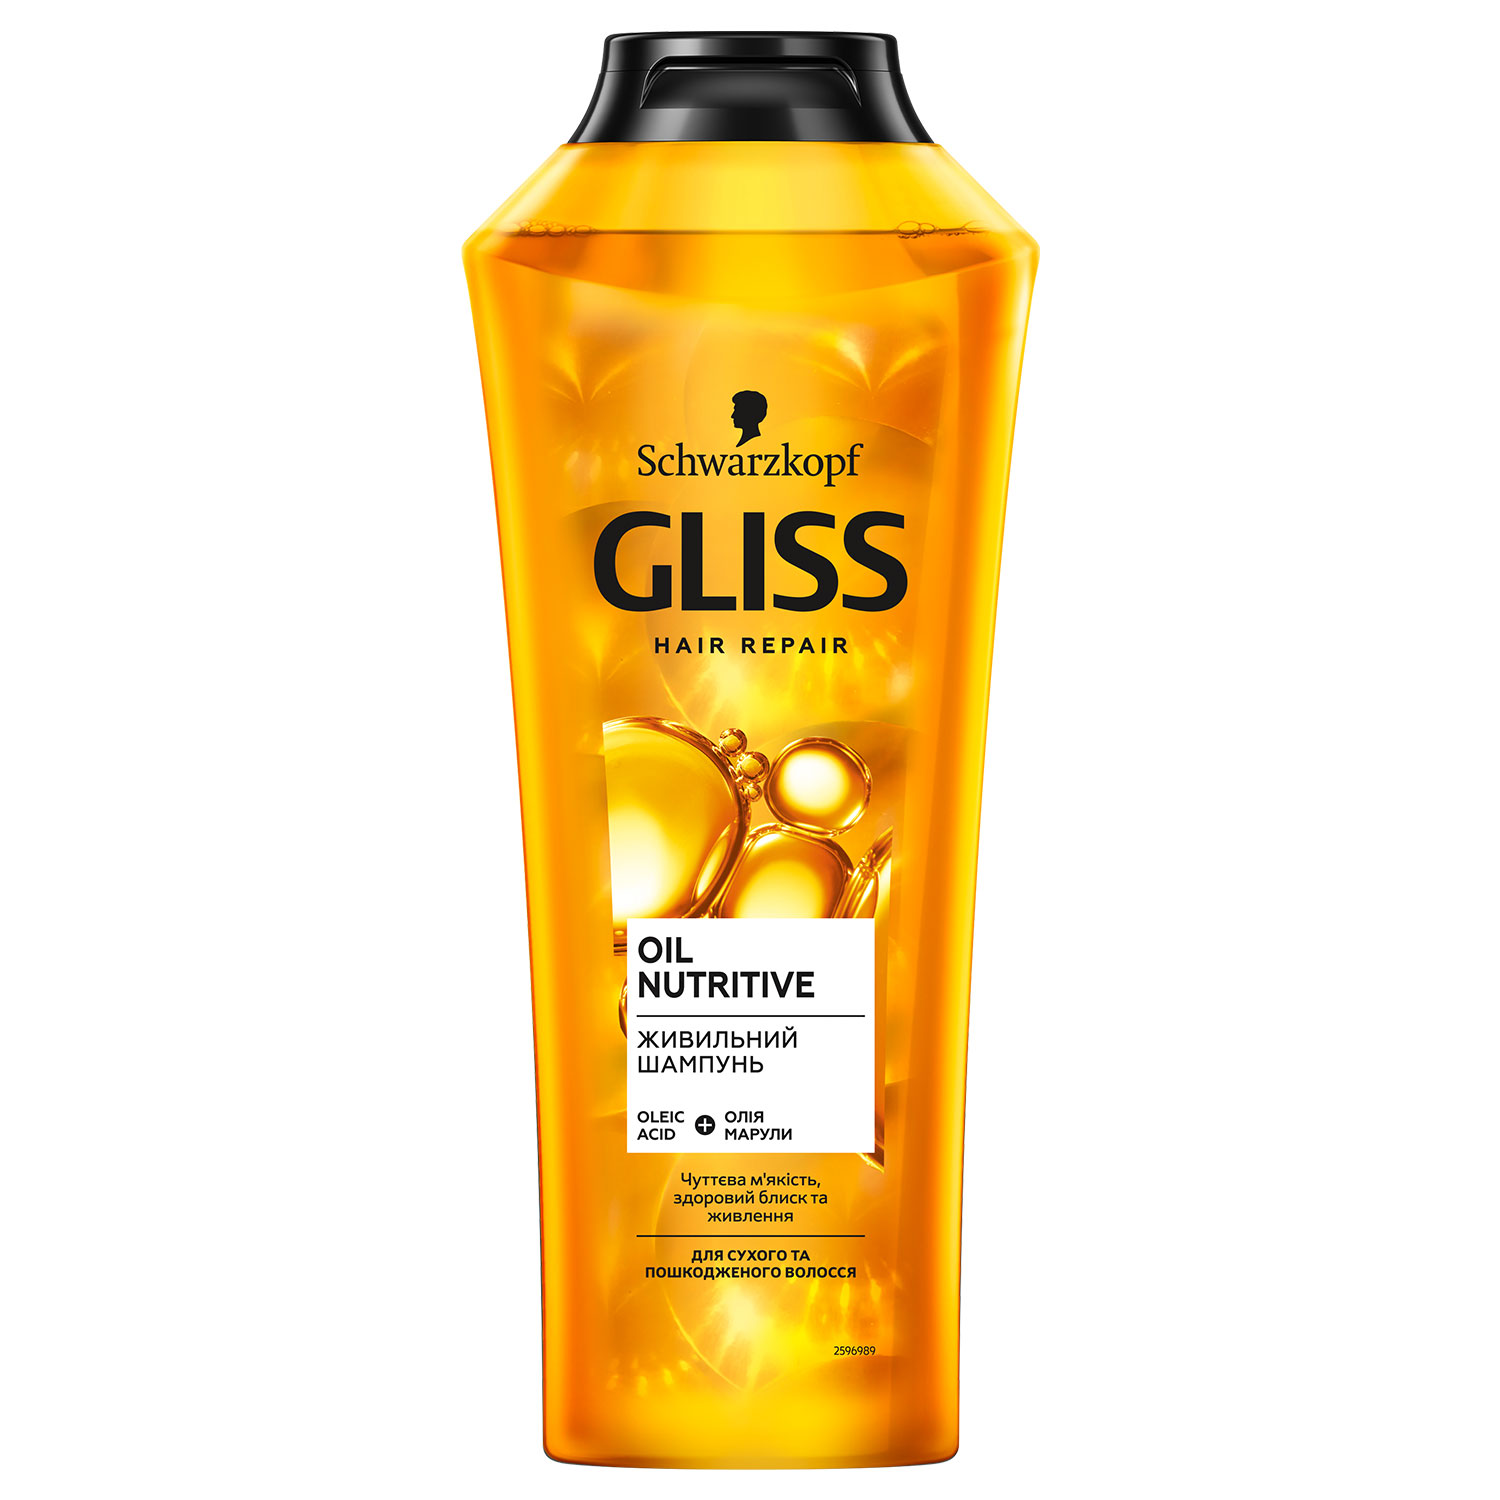 Shampoo GLISS Oil Nutritive 400 ml